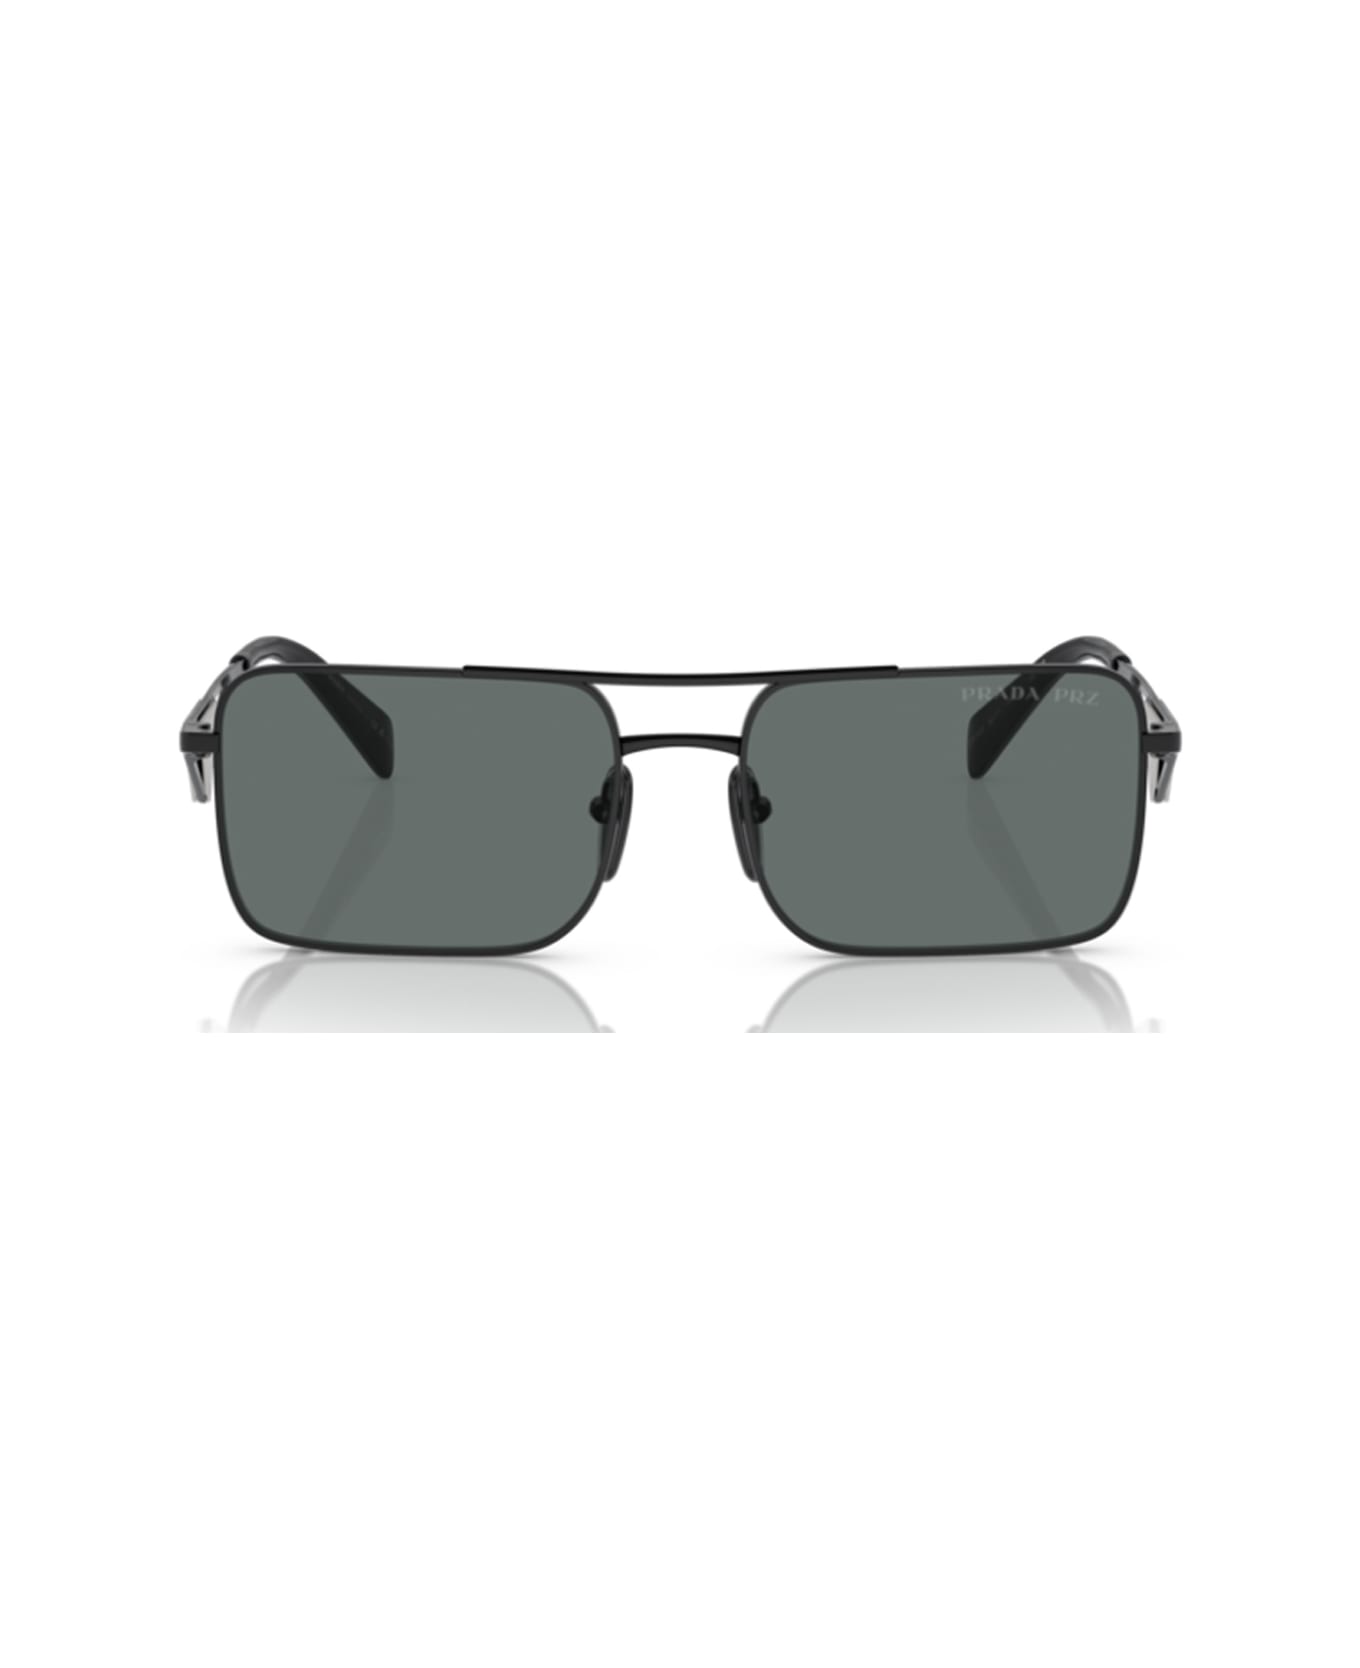 Prada Eyewear Pra52s 1ab5z1 Sunglasses RGE - Nero